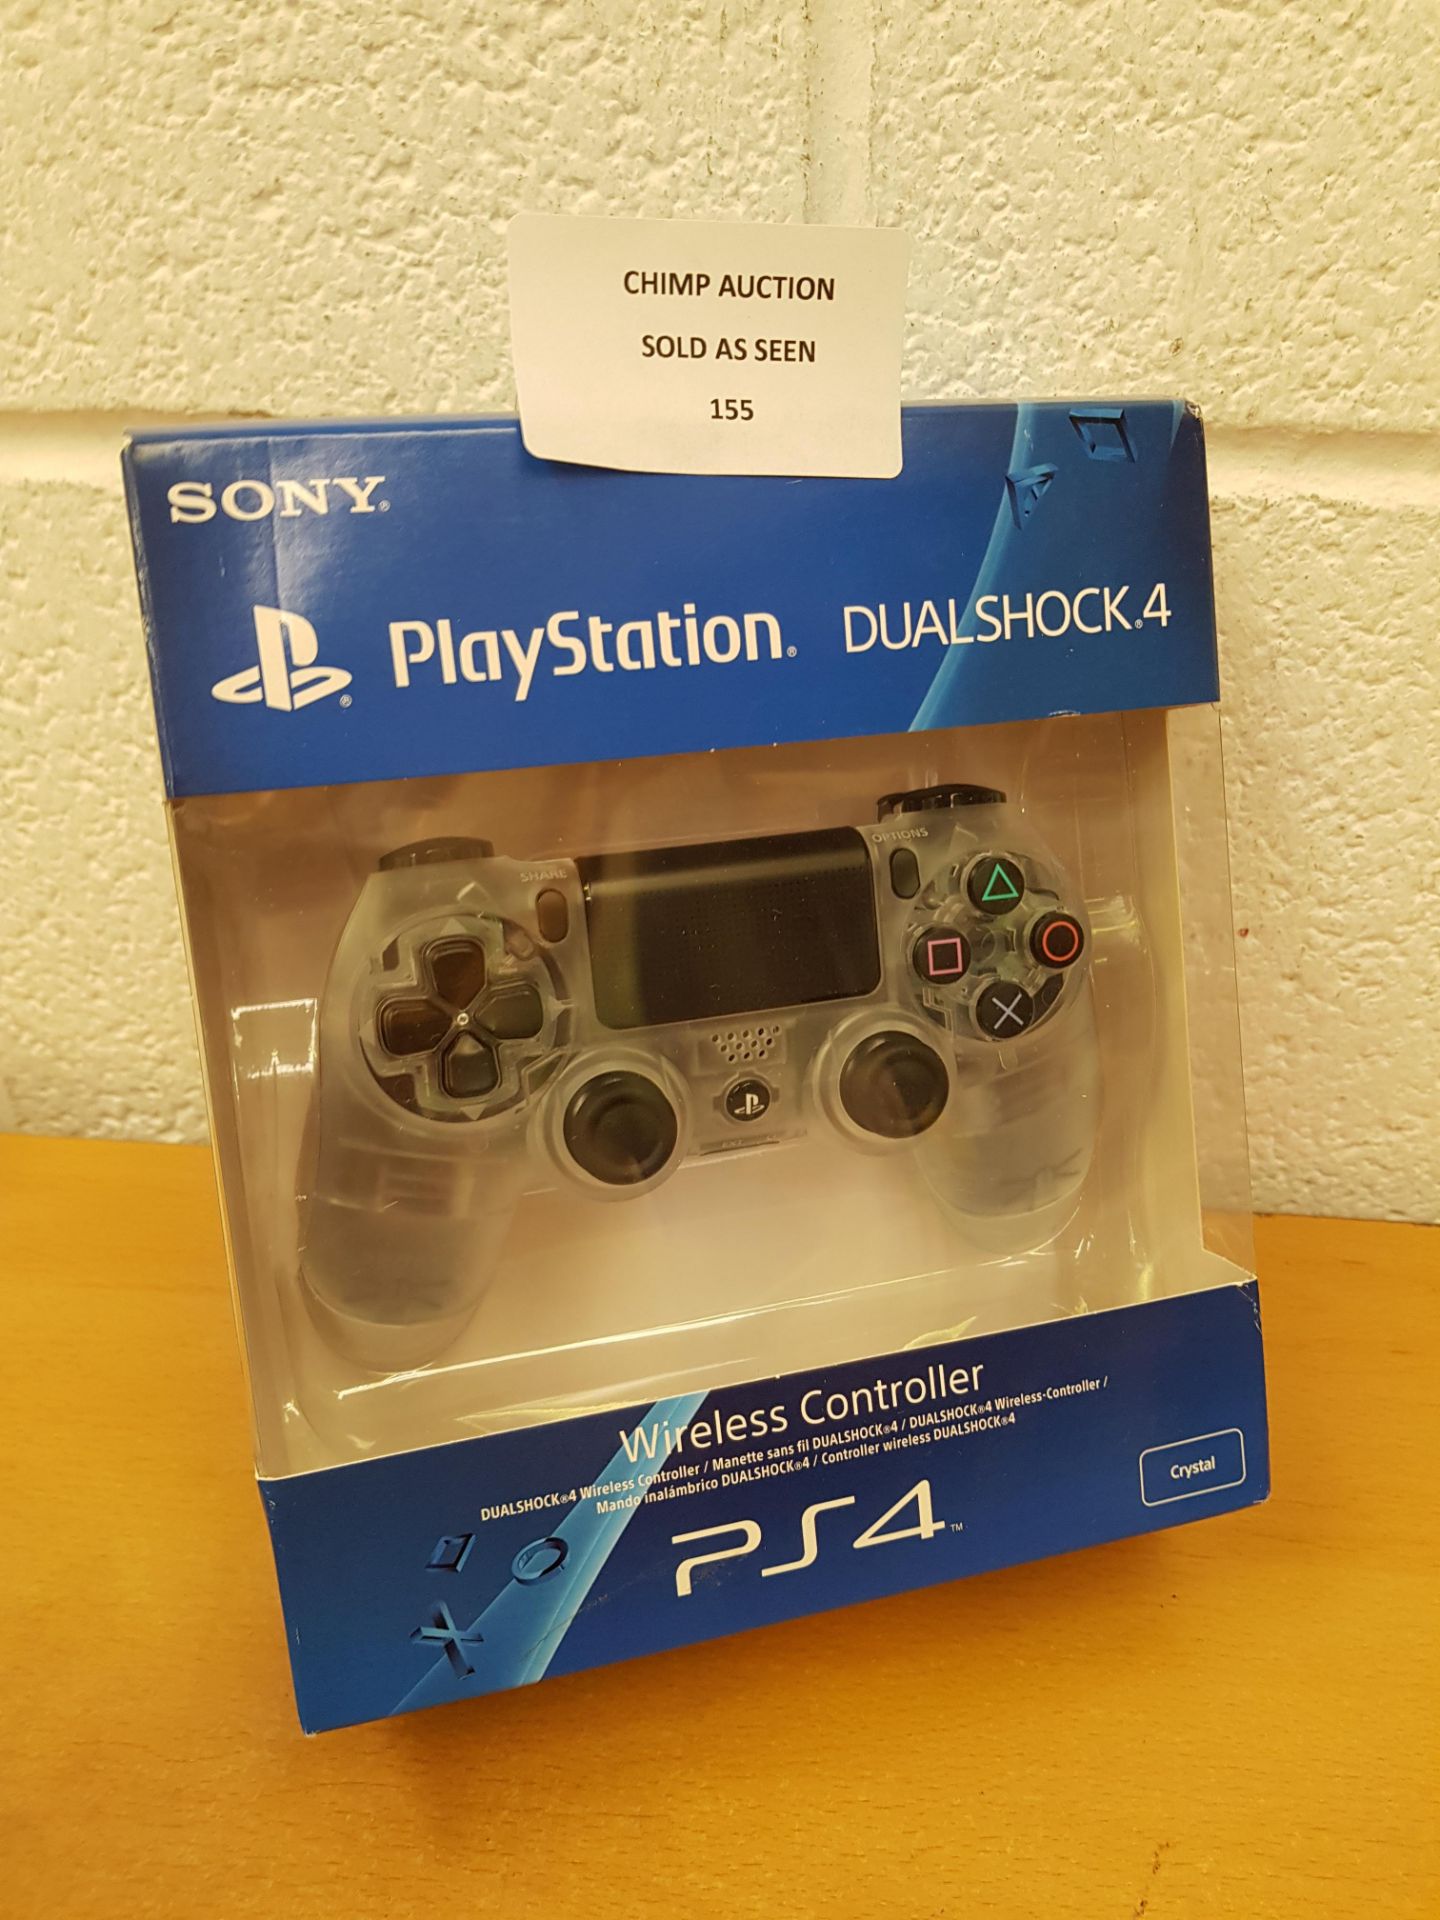 Brand new Sony Playstation Dualshock 4 wireless controller £59.99.